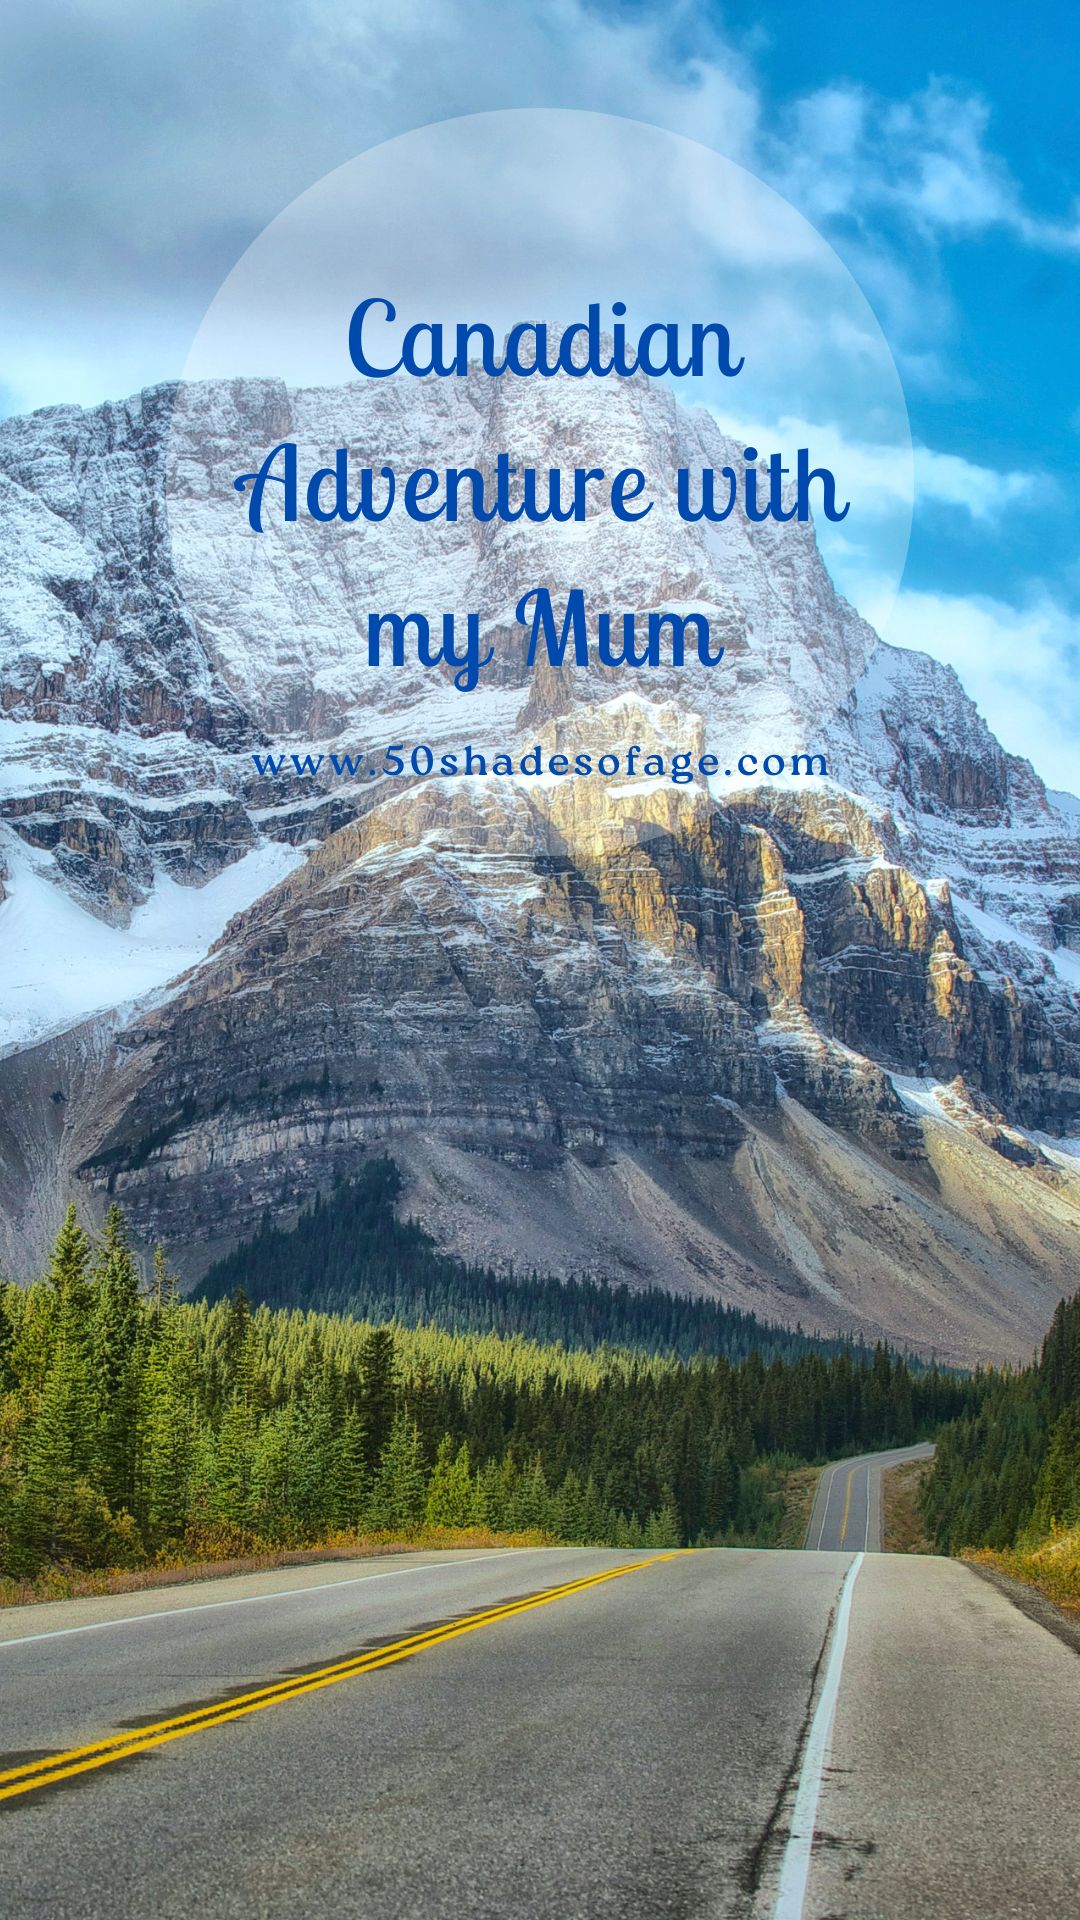 Canadian Adventure with my Mum